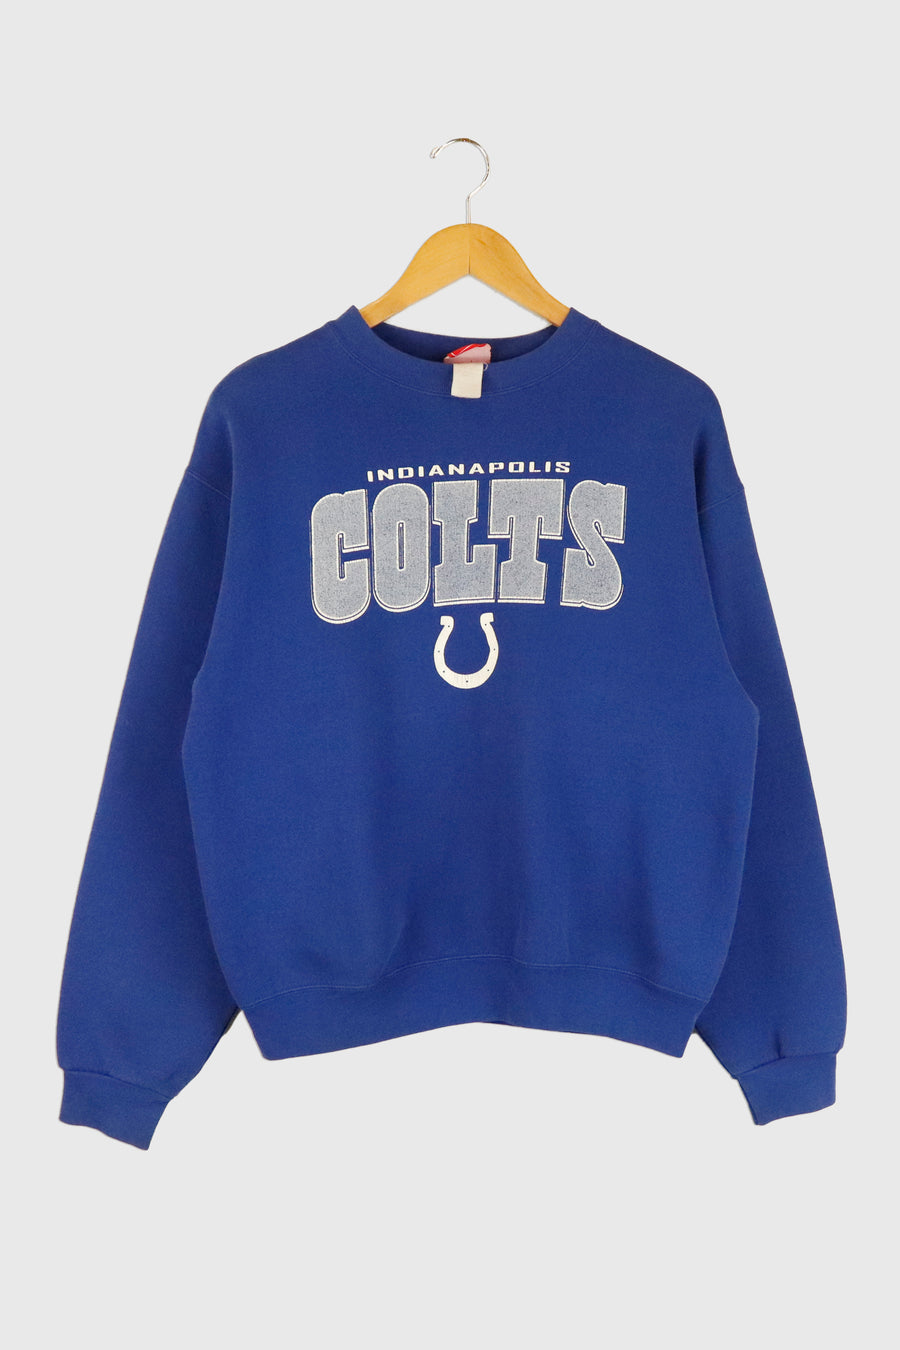 Vintage Indianopolis Colts Sweatshirt Sz XL